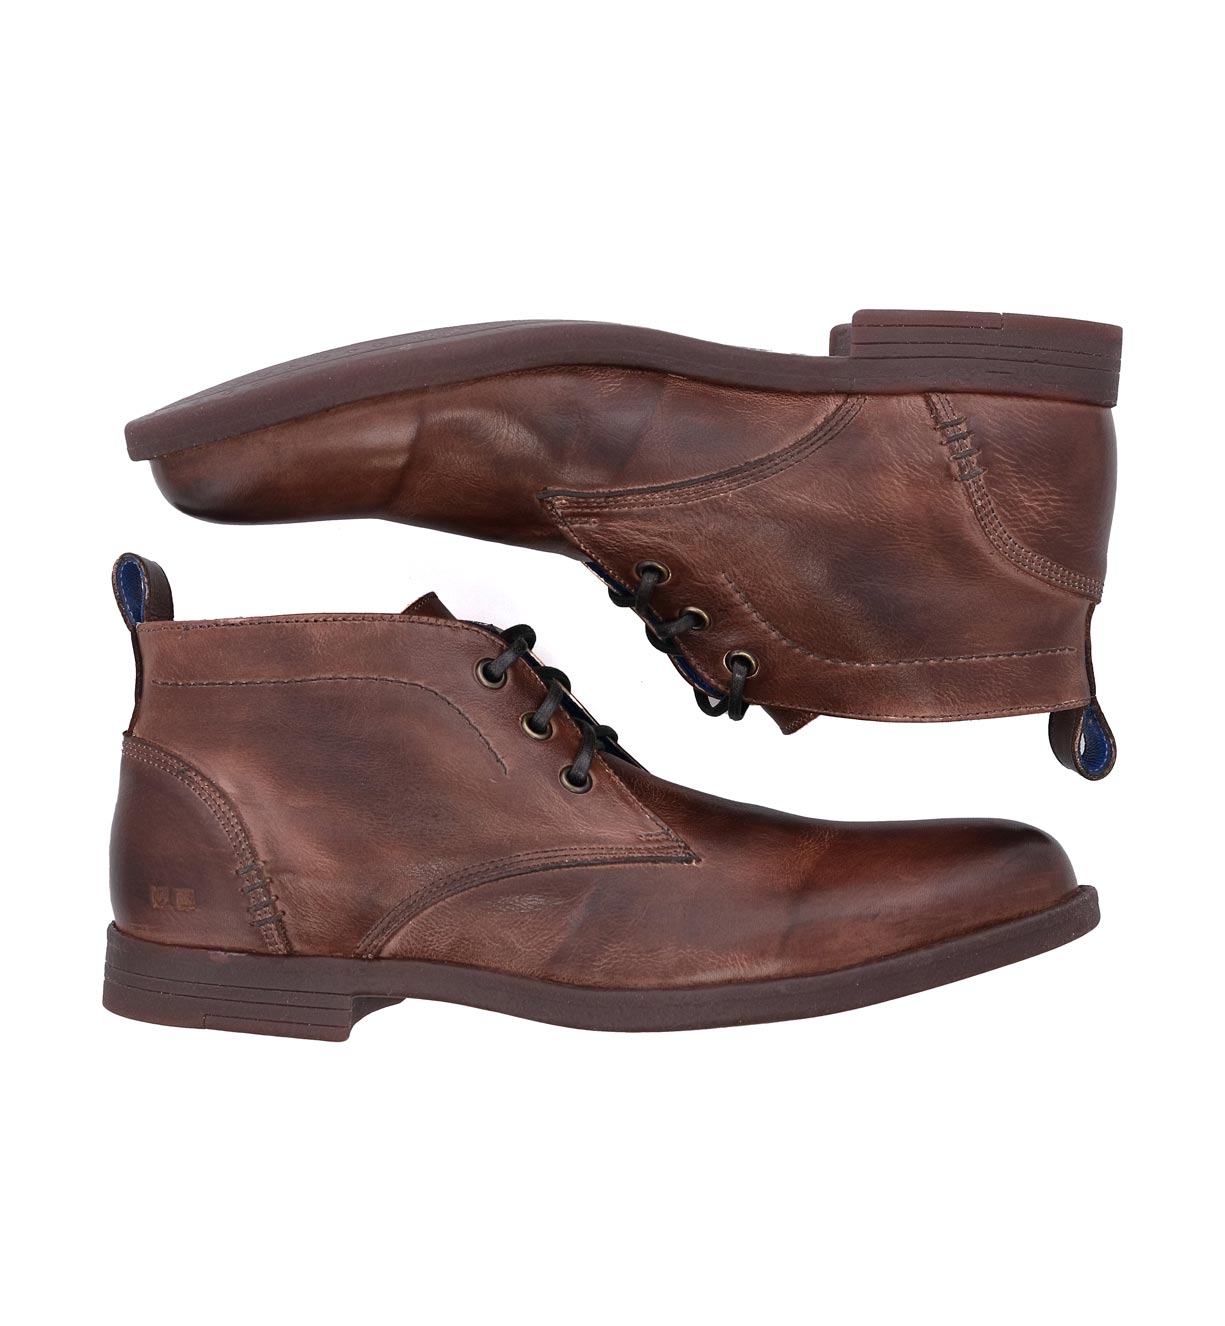 A pair of men's Bed Stu Illiad brown chukka boots.